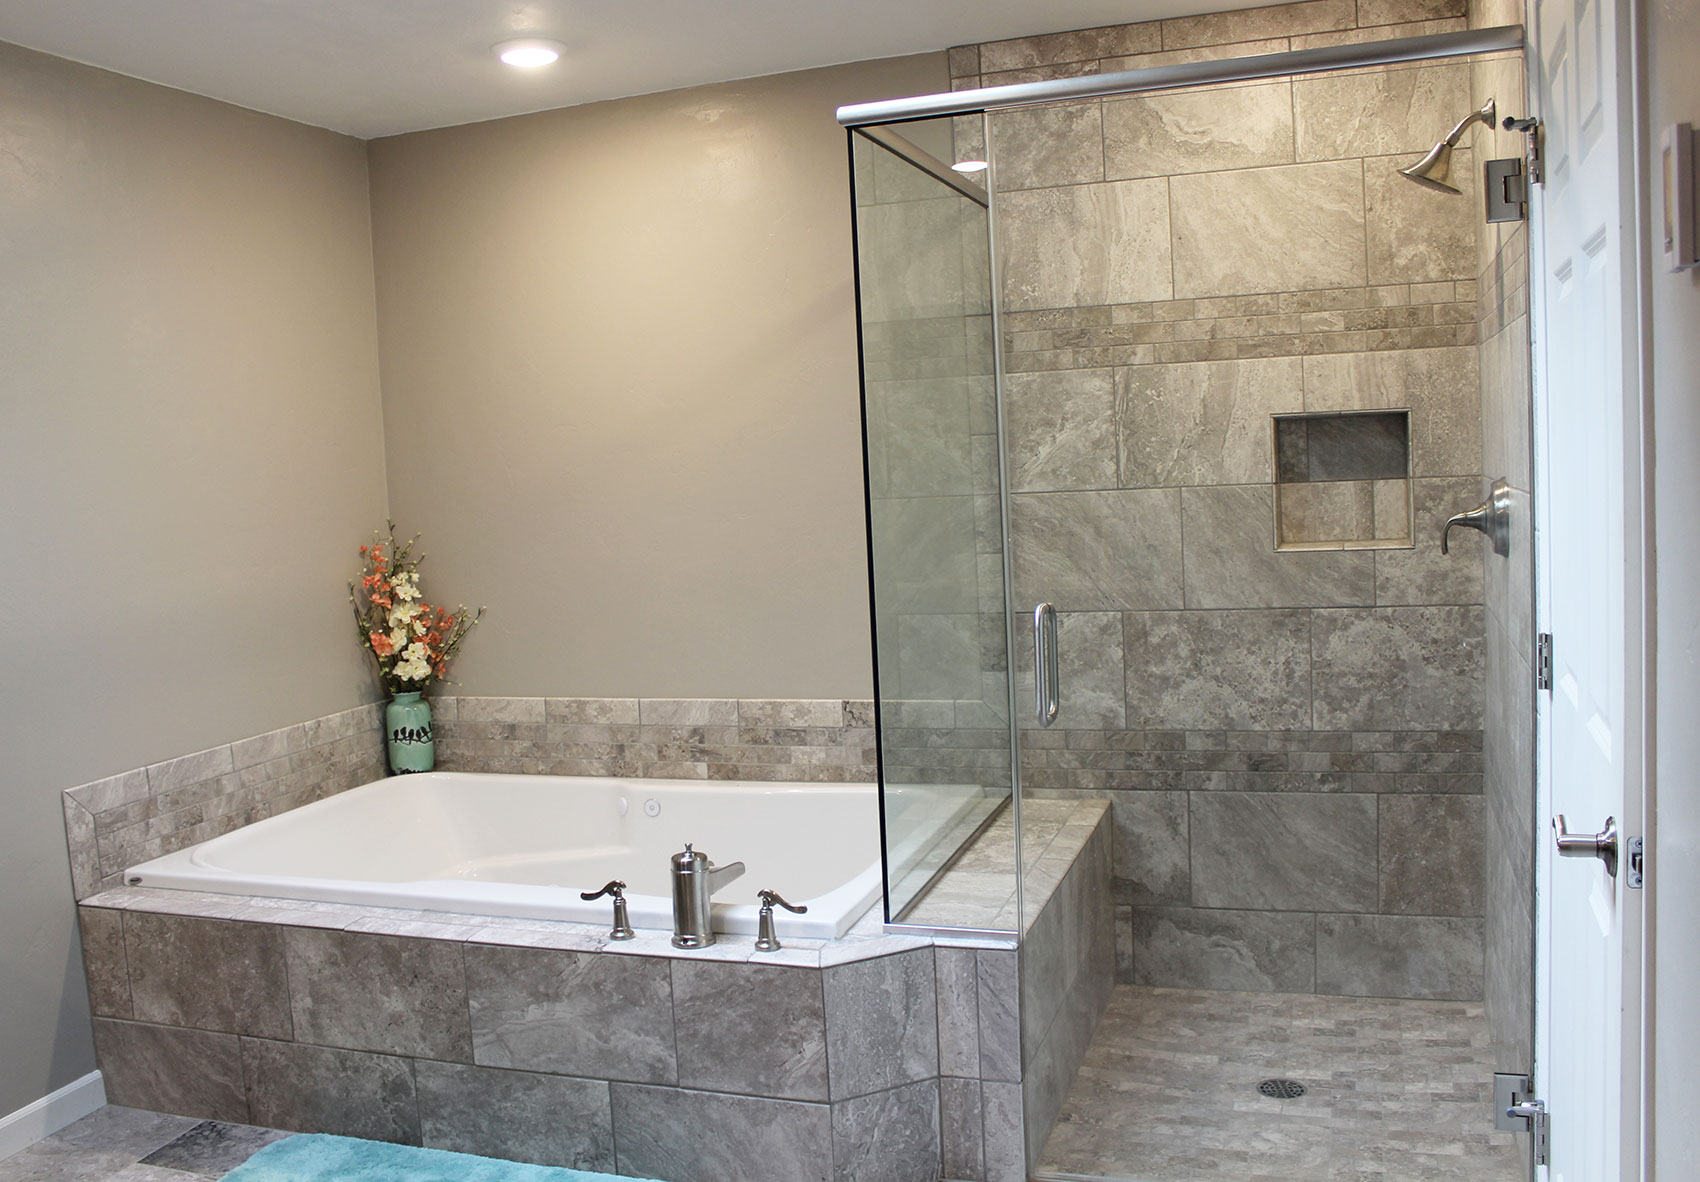 Bathroom remodel - Master Bathroom Remodel - Custom Tile ...